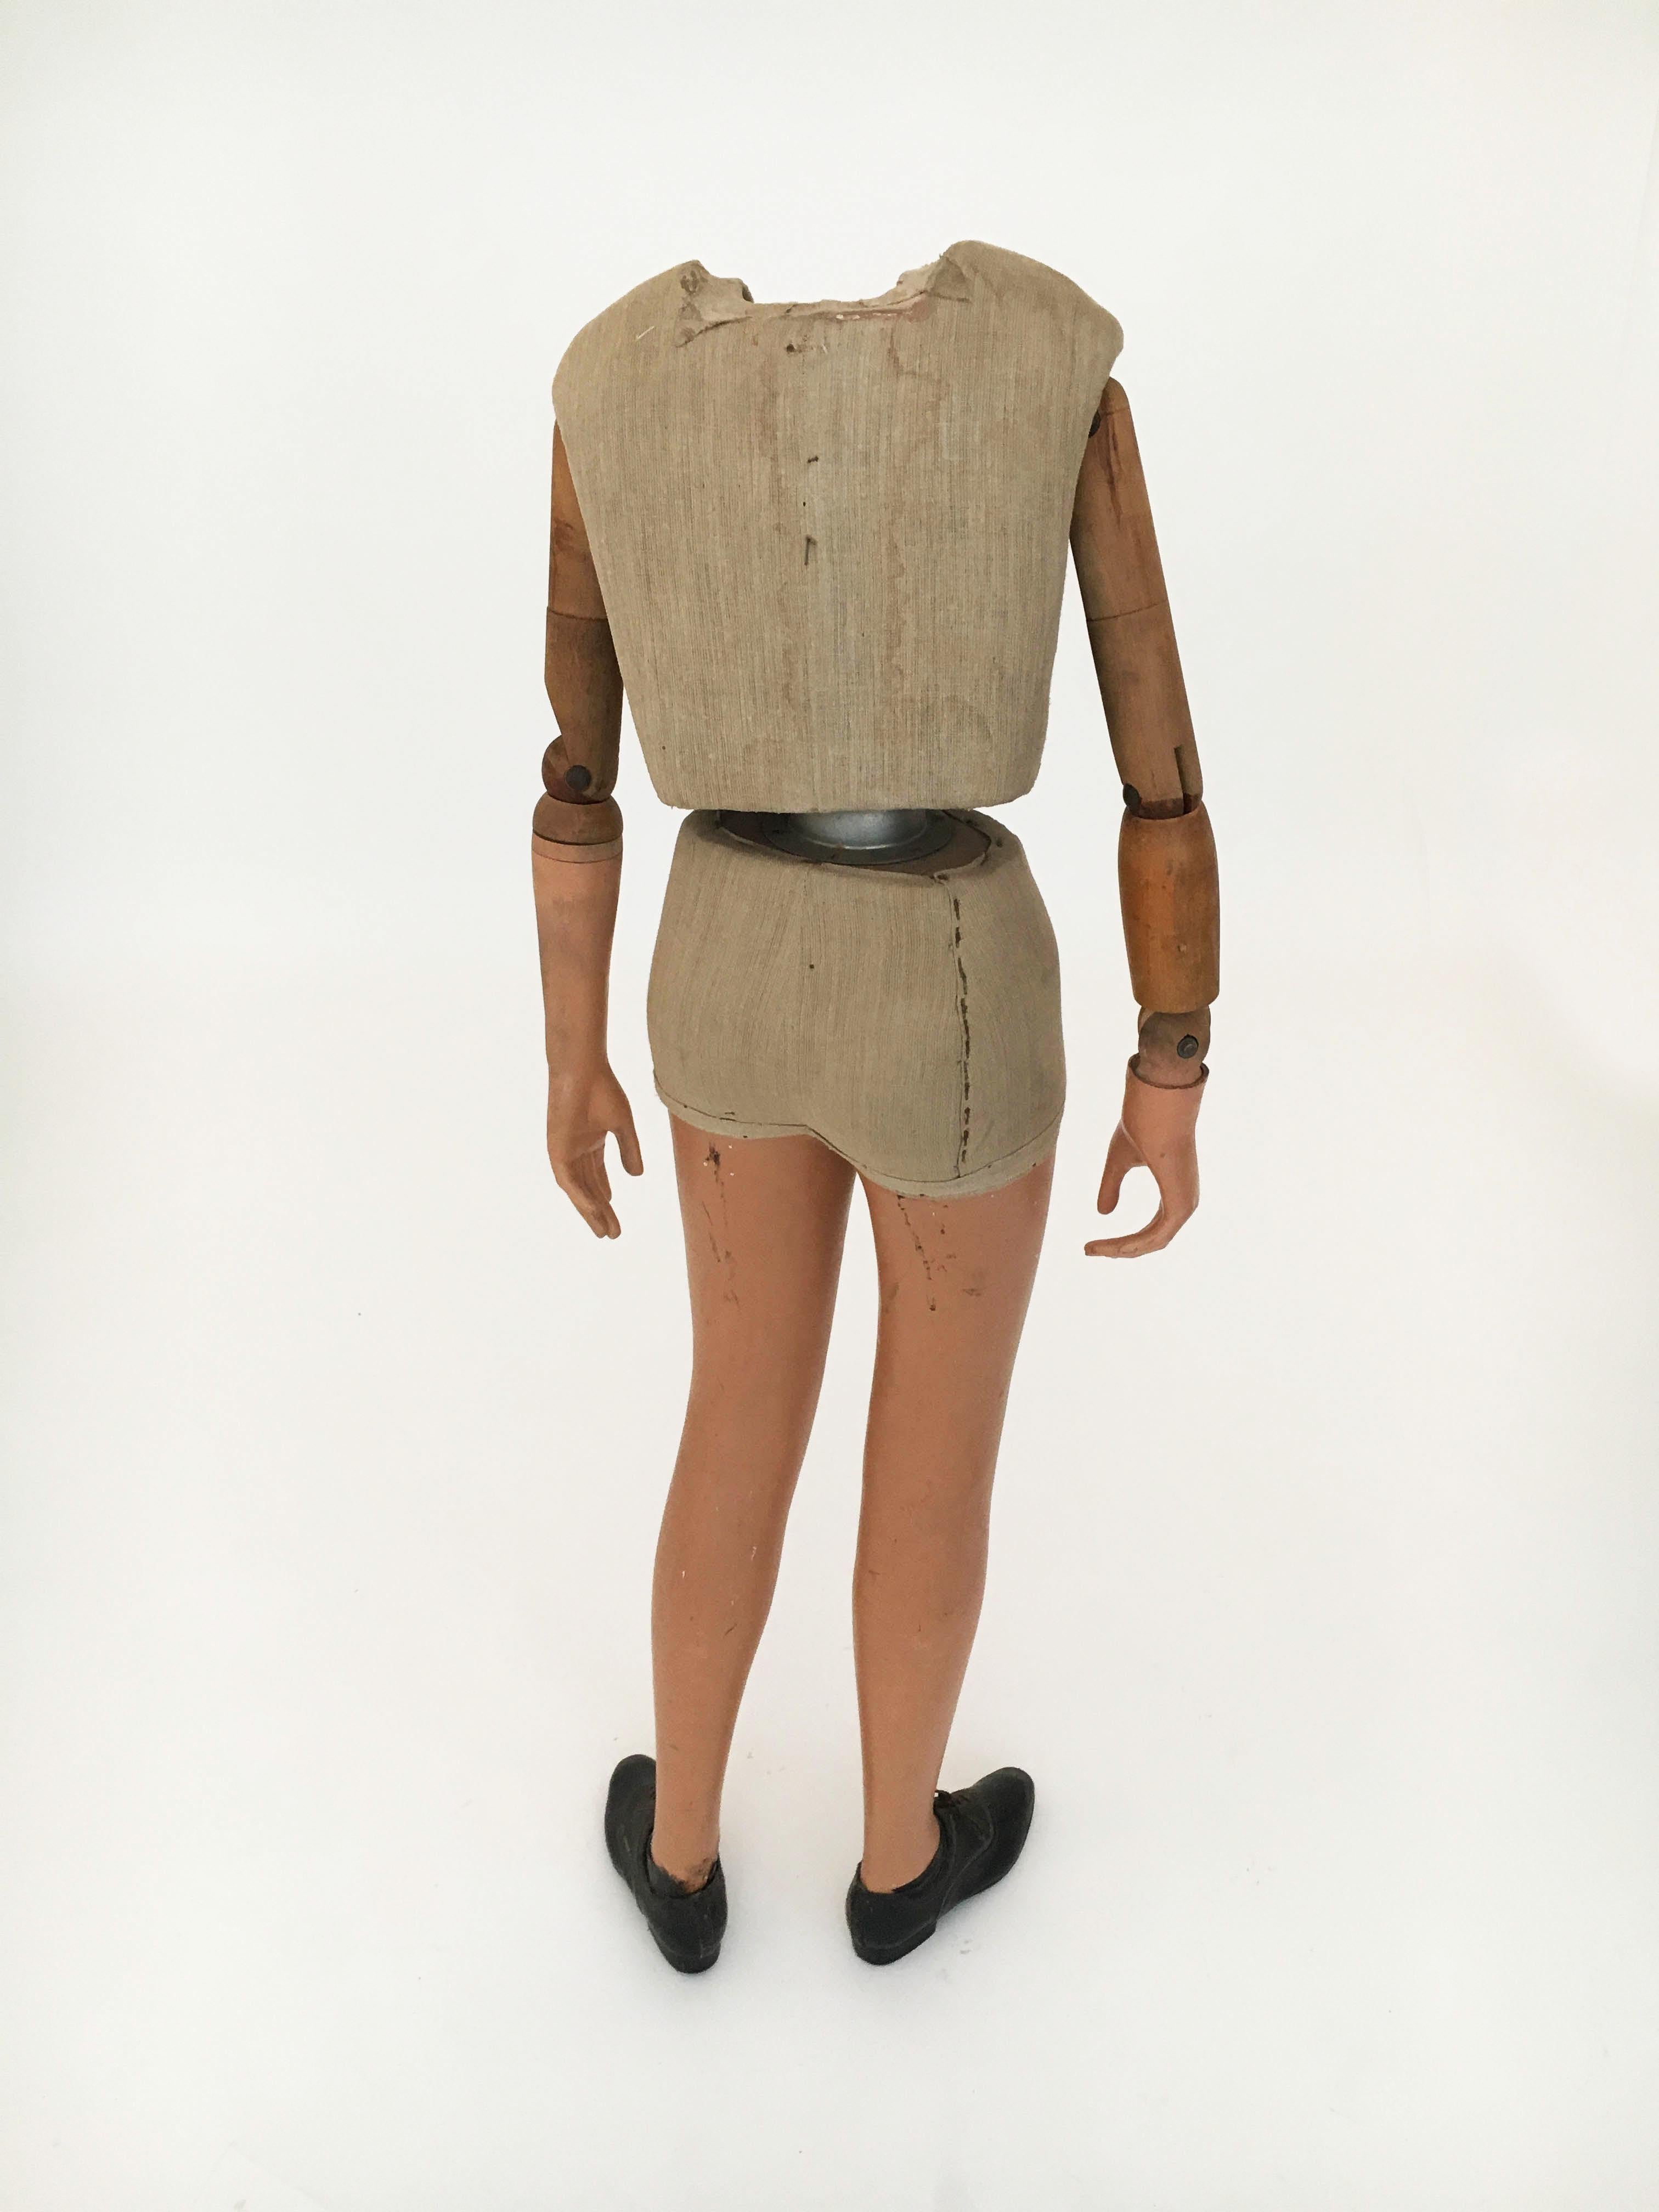 Abstract DA-DA German Shop Mannequin Dress Form, Munich, 1920s For Sale 2